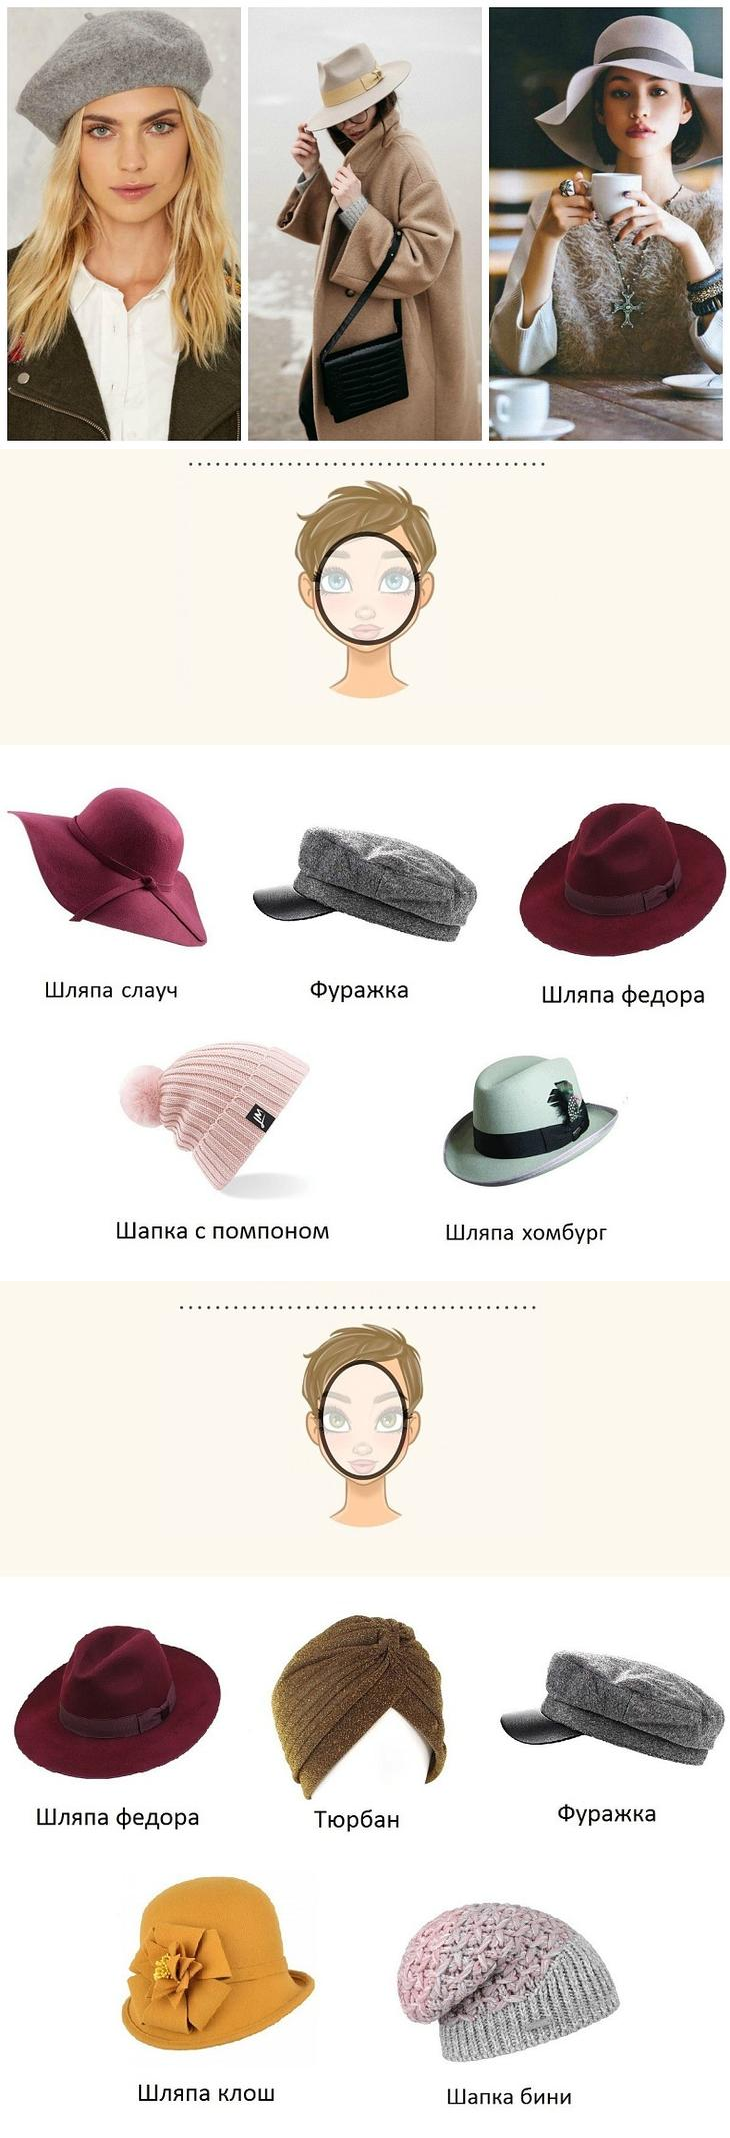 Форма шляпки для круглолицых